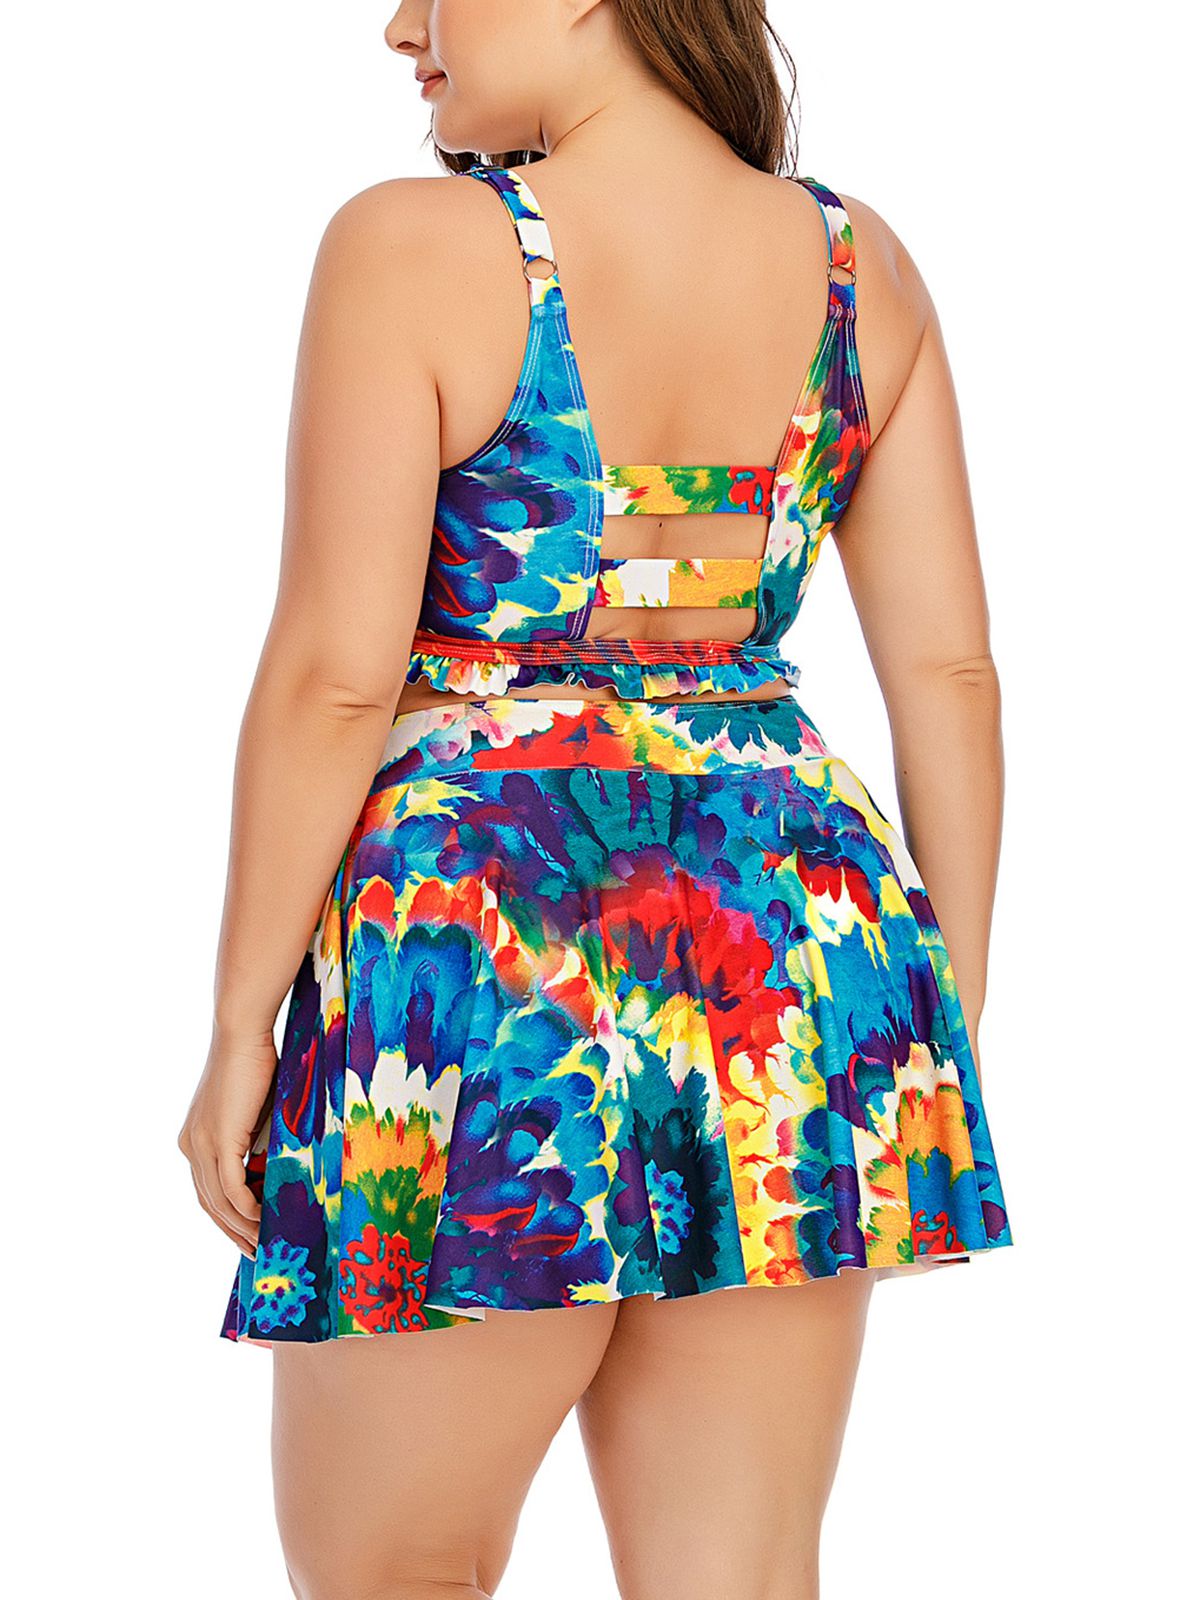 Retro Stage Swimsuit Plus Size Plus Size Floral Skirted Bikini Set